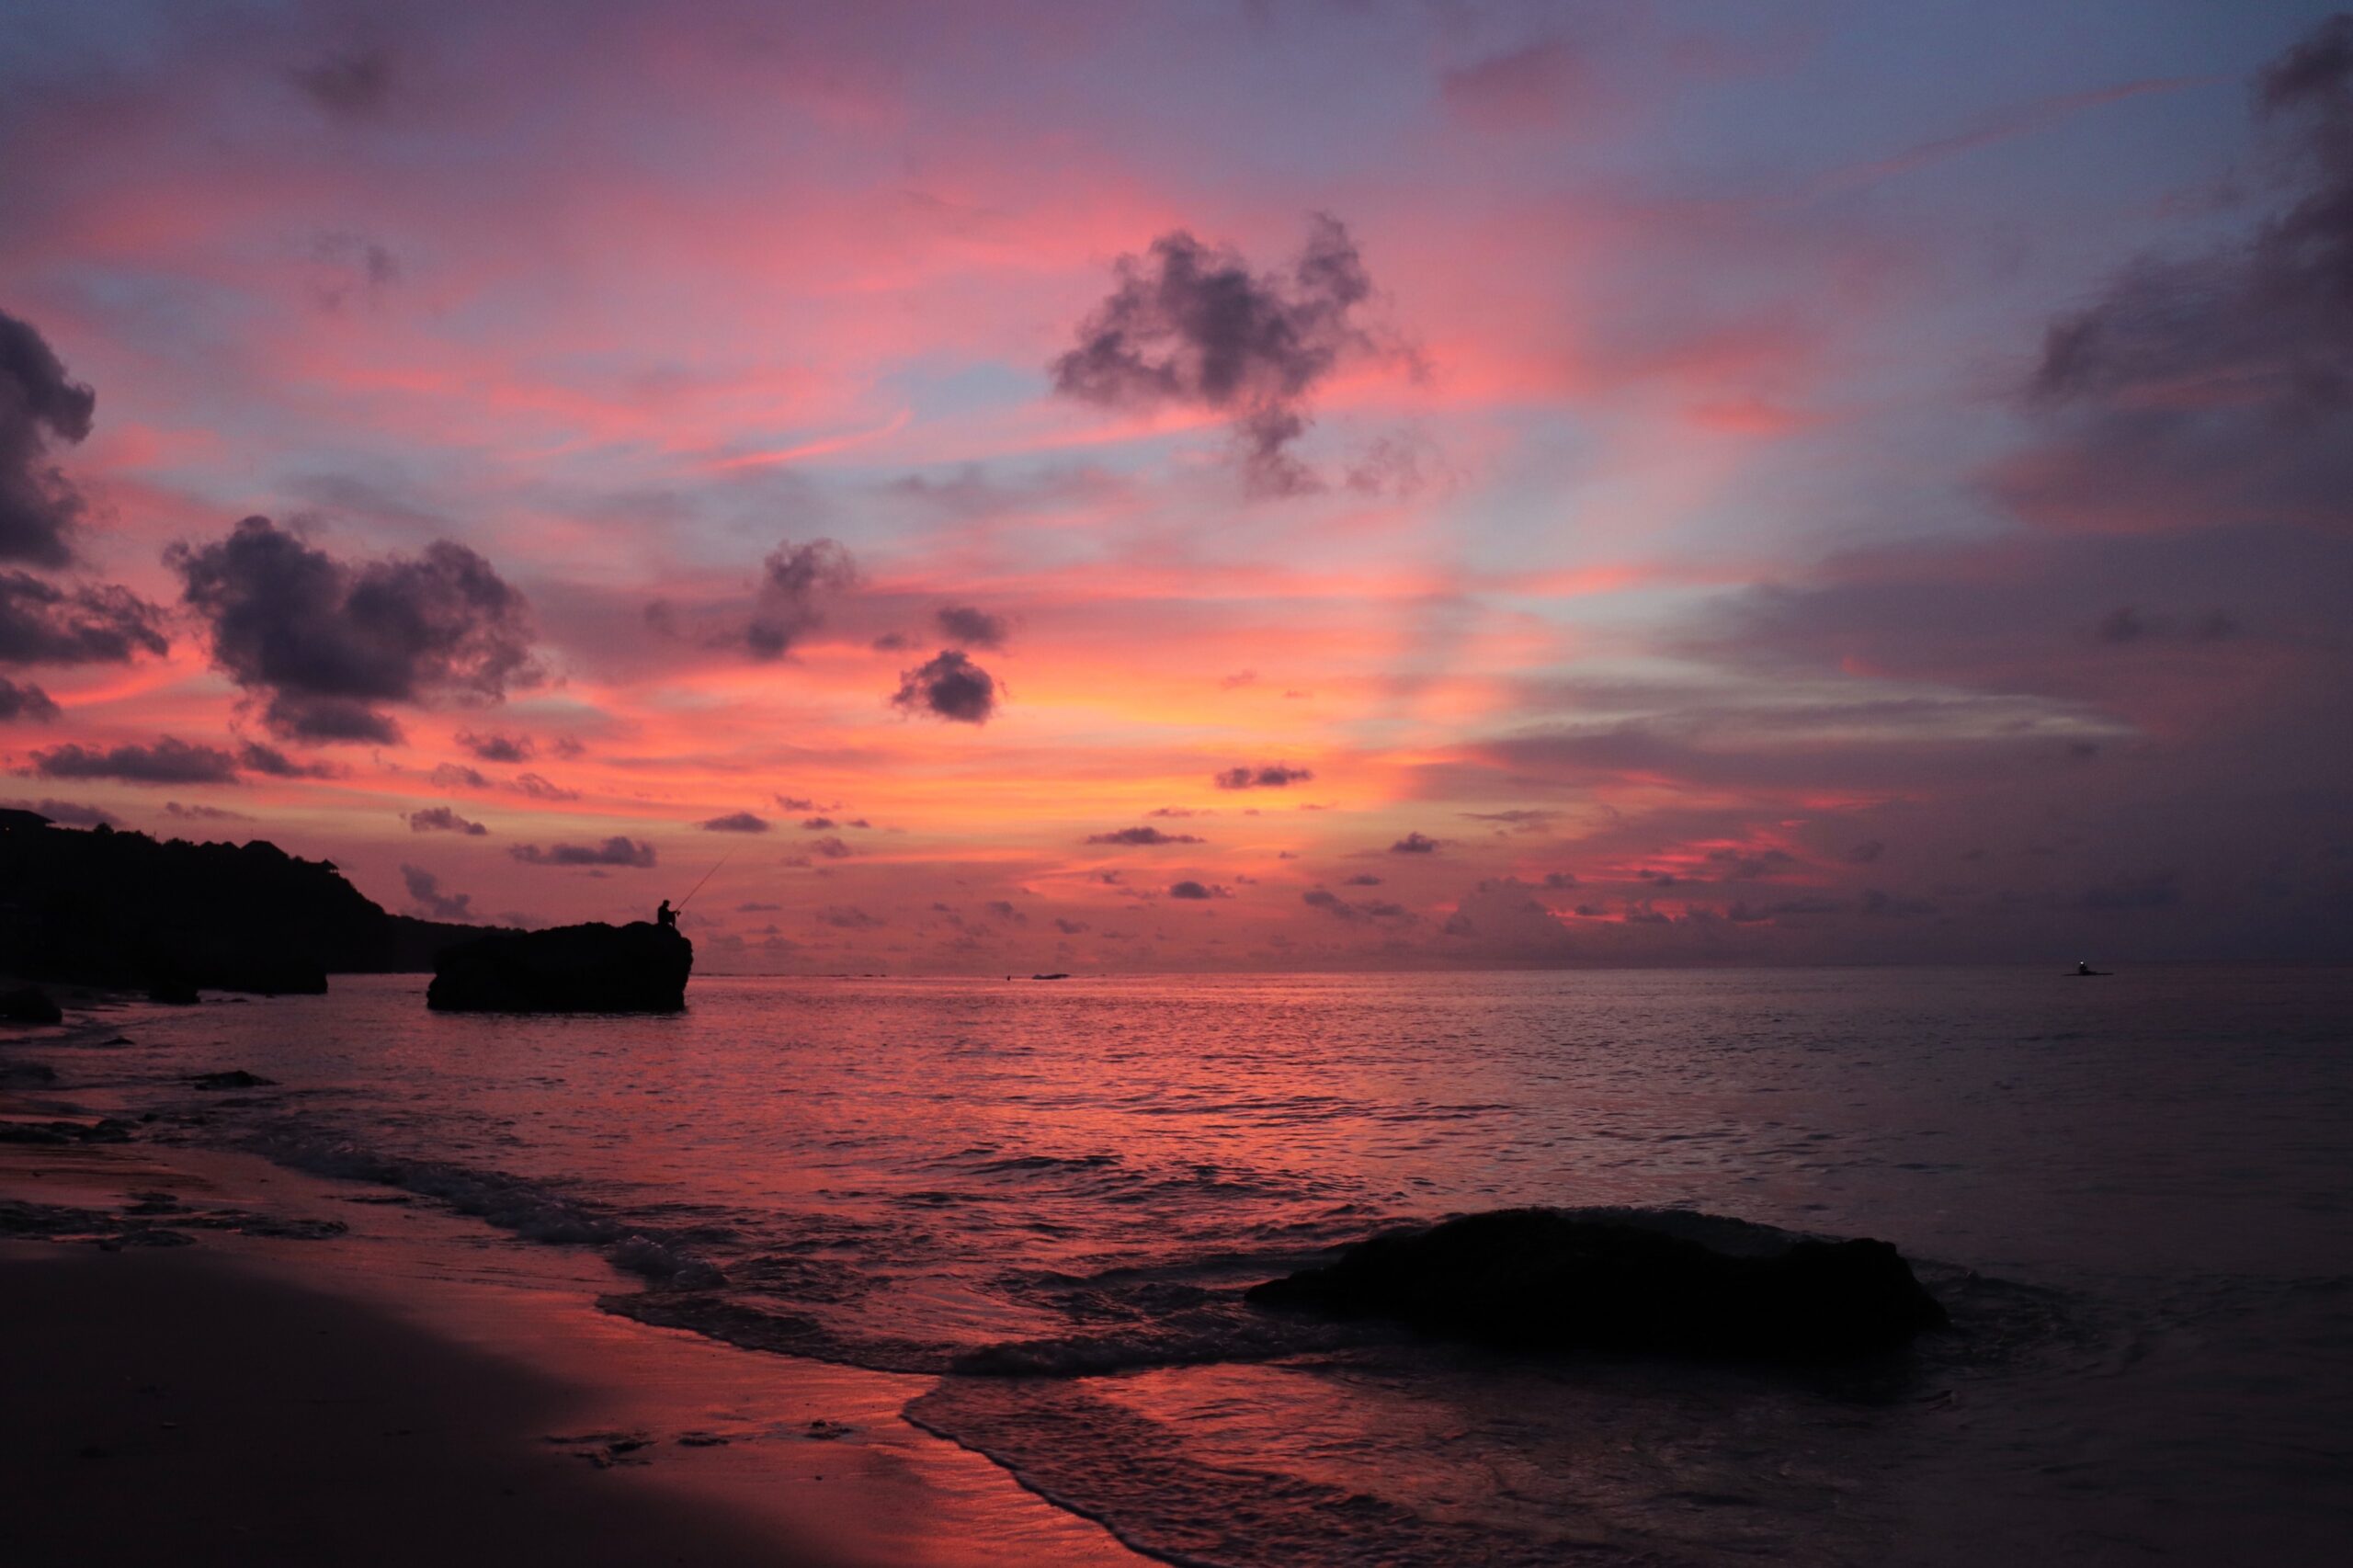 sunset beach son of cauvery ponniyin selvan image source unsplash.com